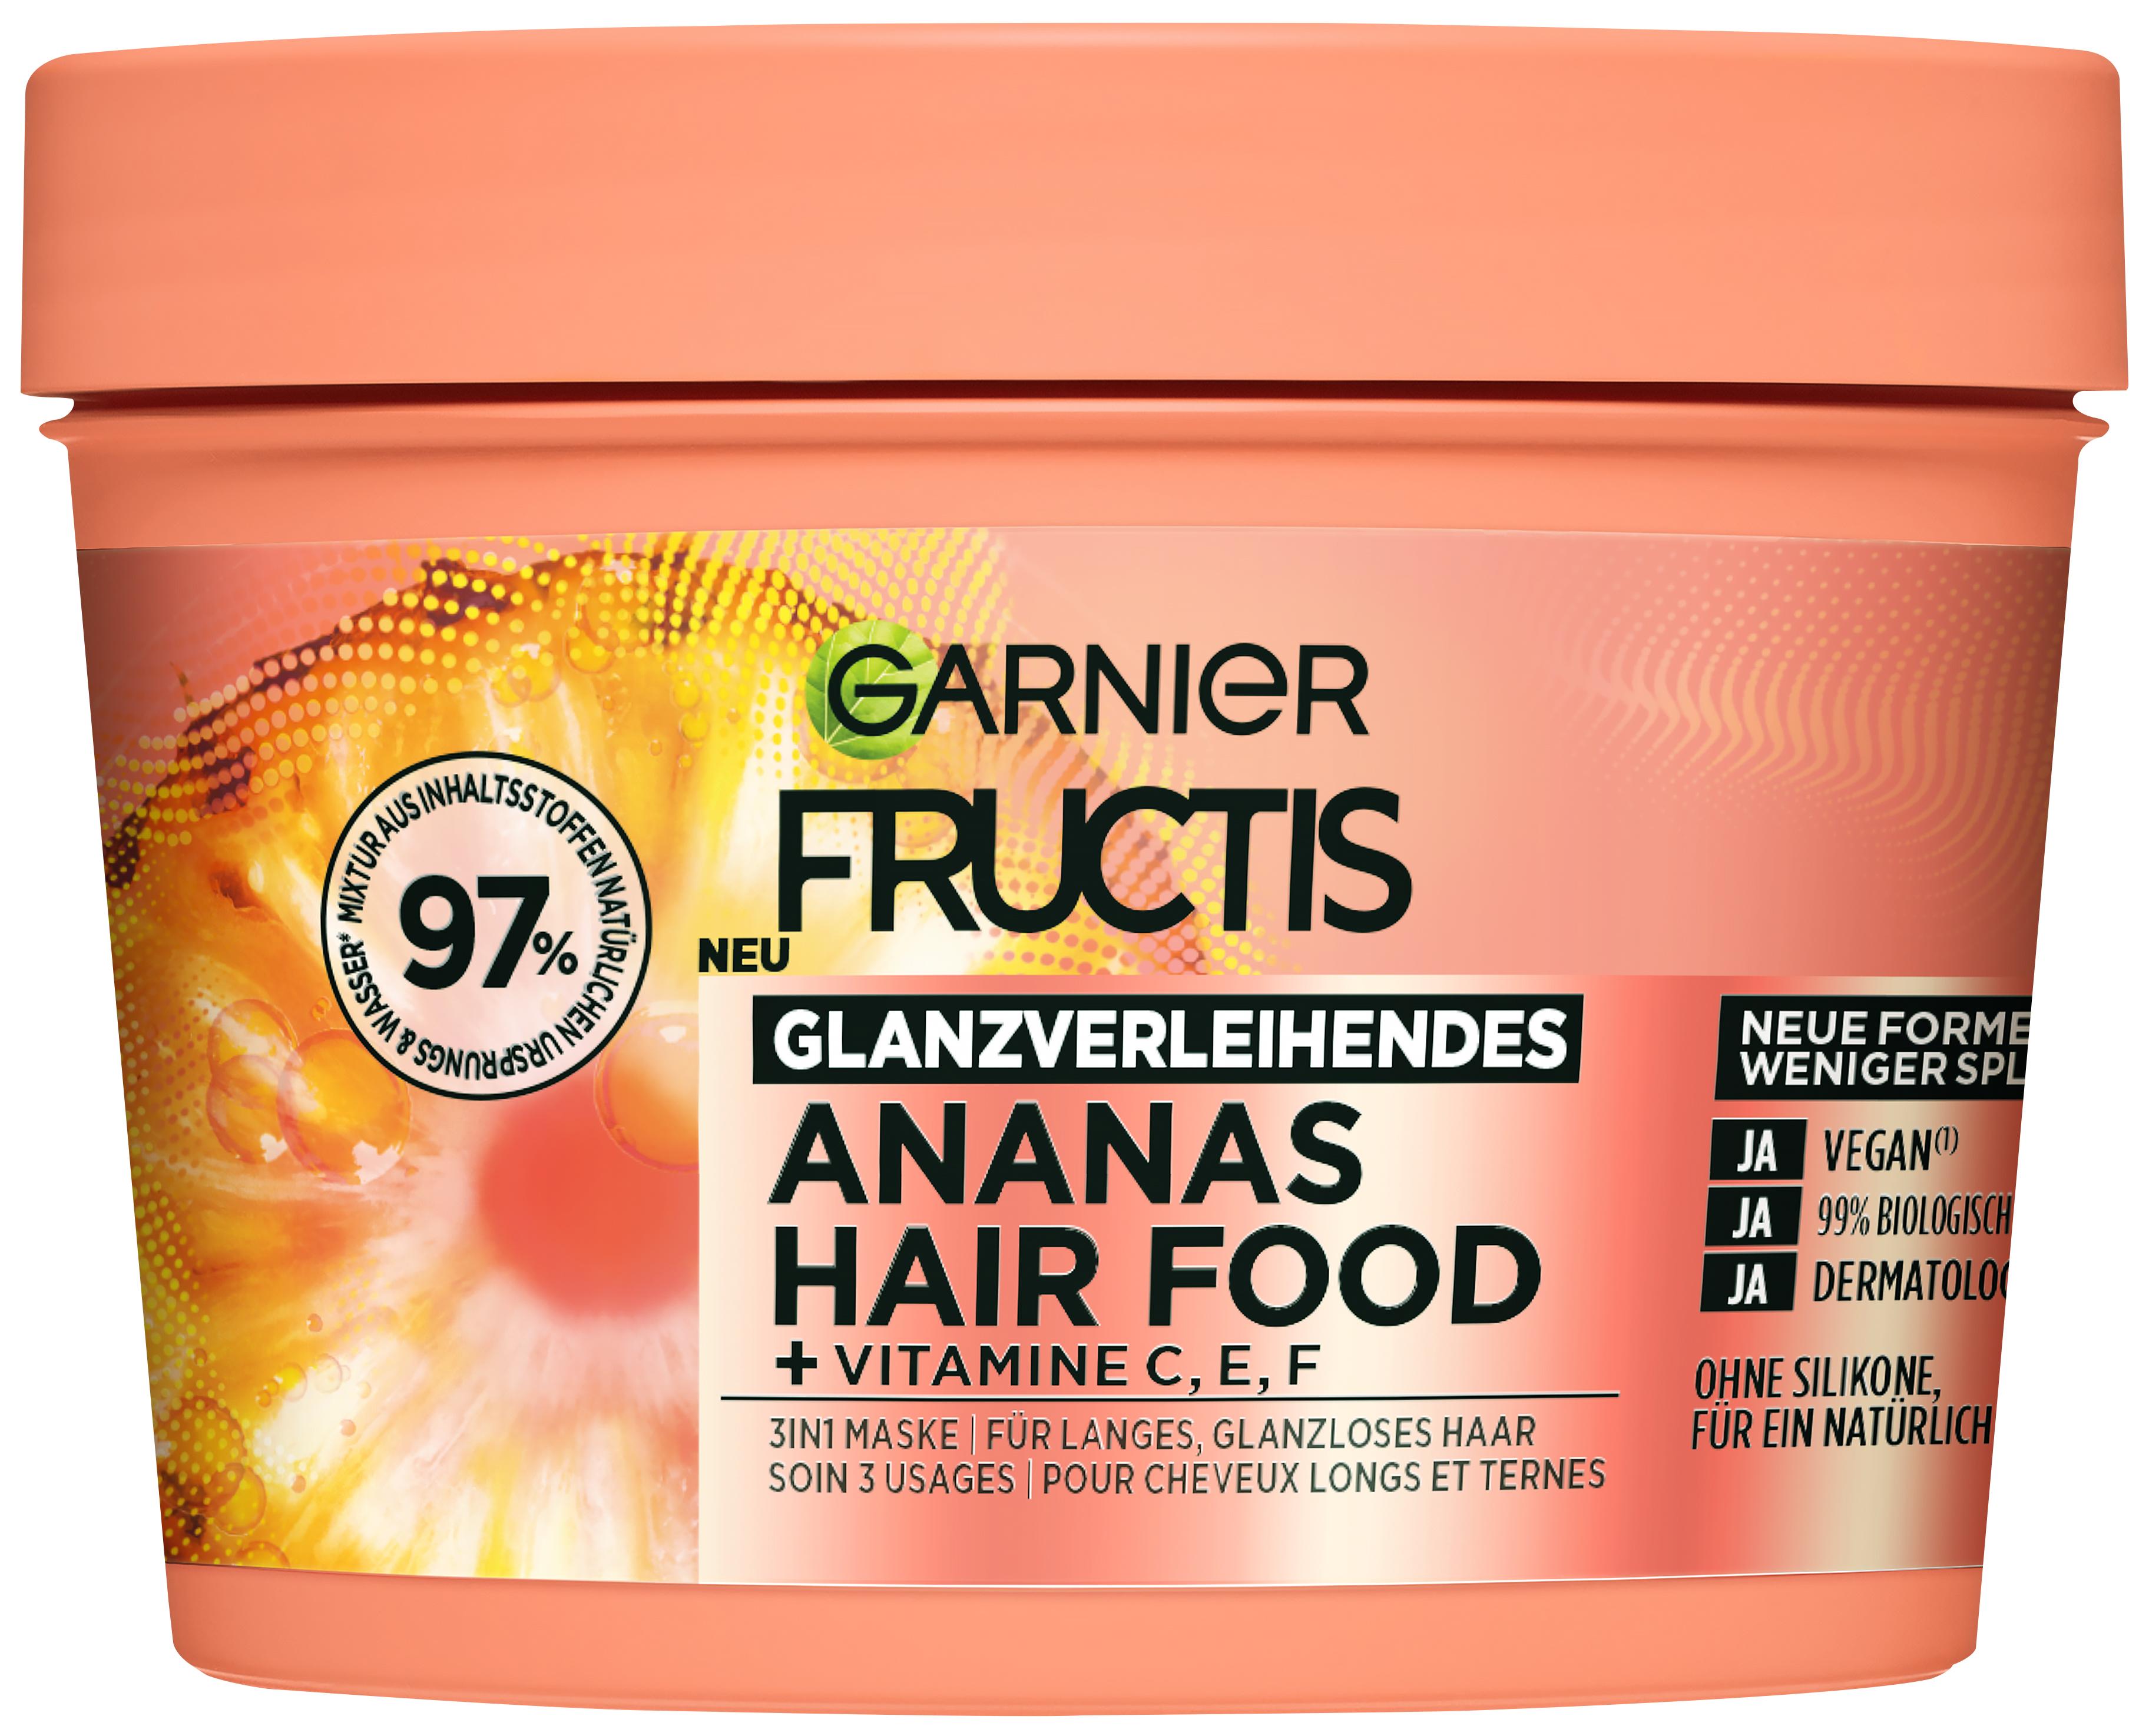 Fructis - Glanzverlehende Ananas Hair Food - 3in1 Maske